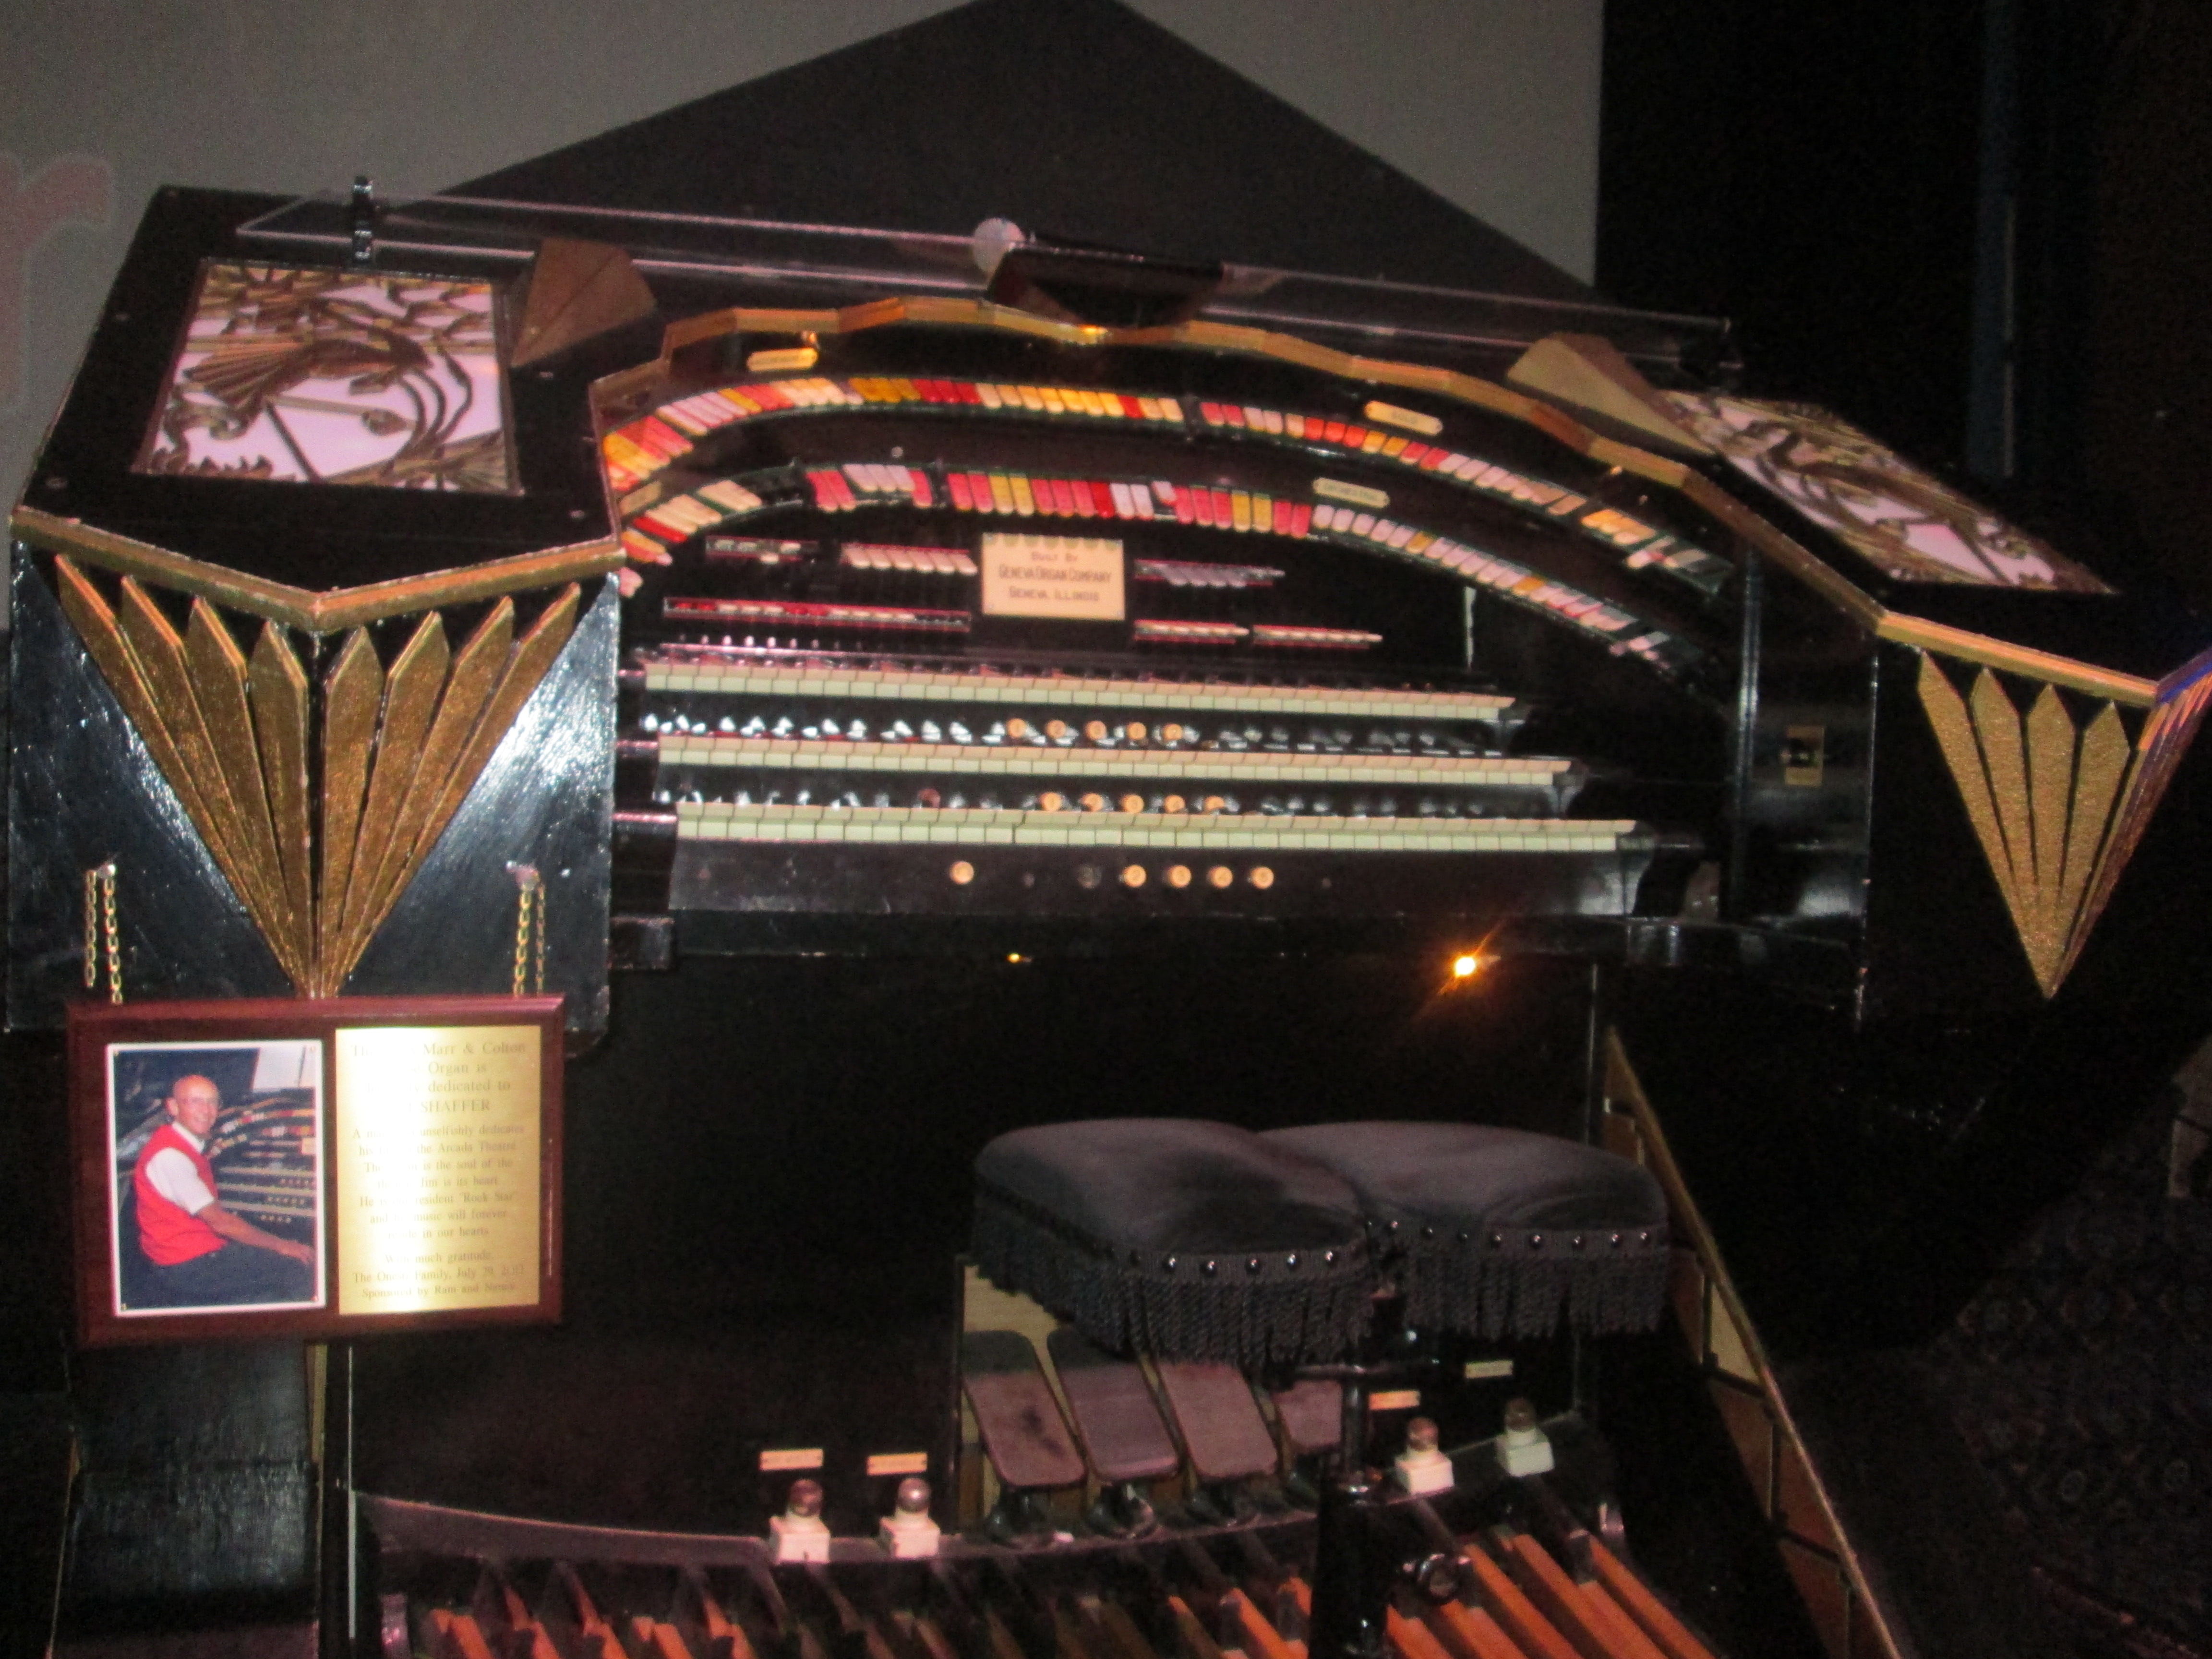 The organ at the Arcada Theater